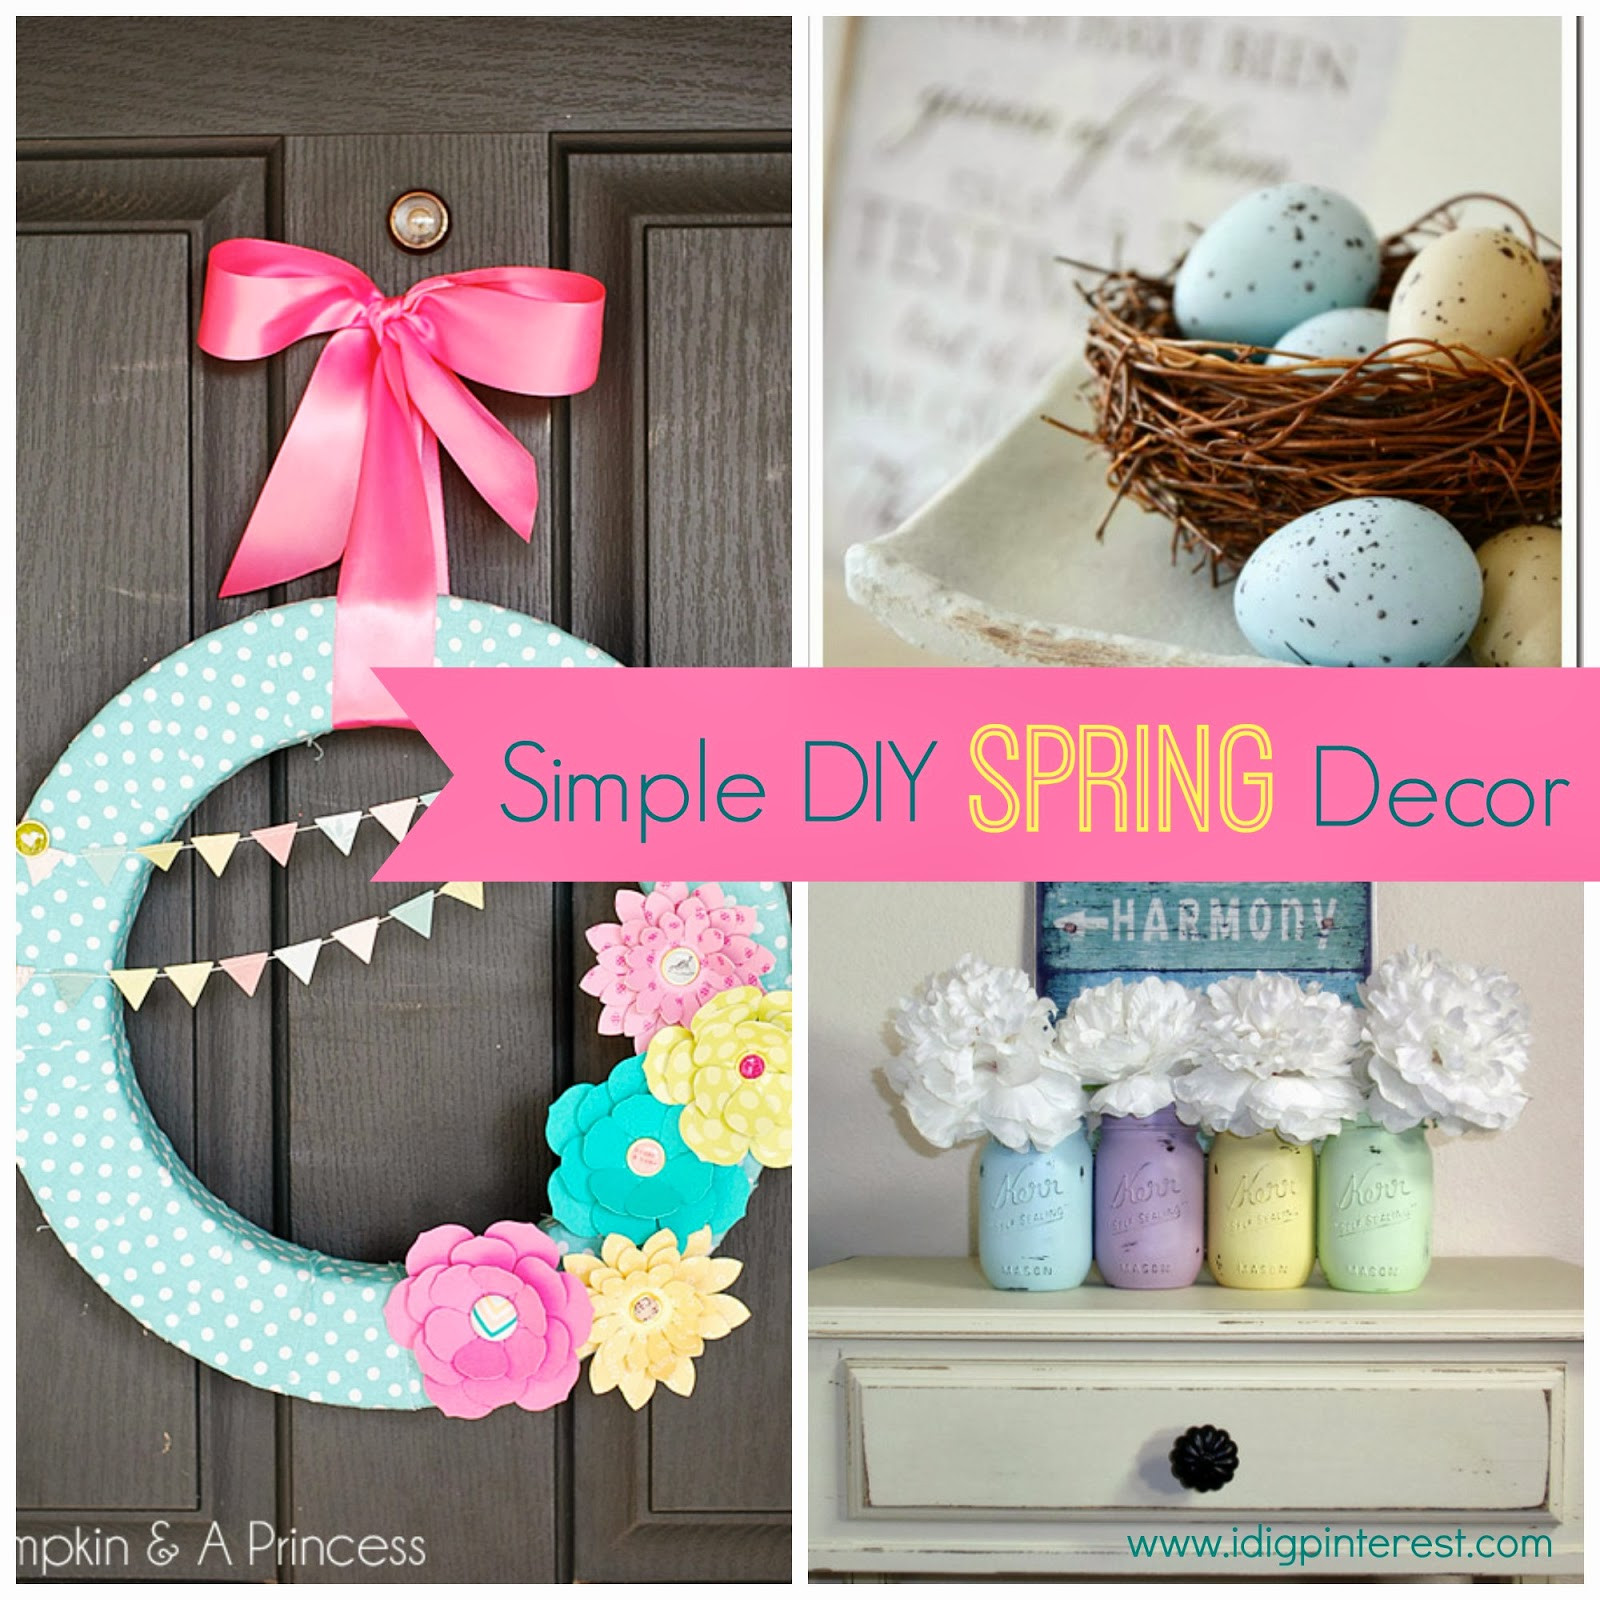 Pinterest Home Decorating DIY
 Simple DIY Spring Decor Ideas I Dig Pinterest